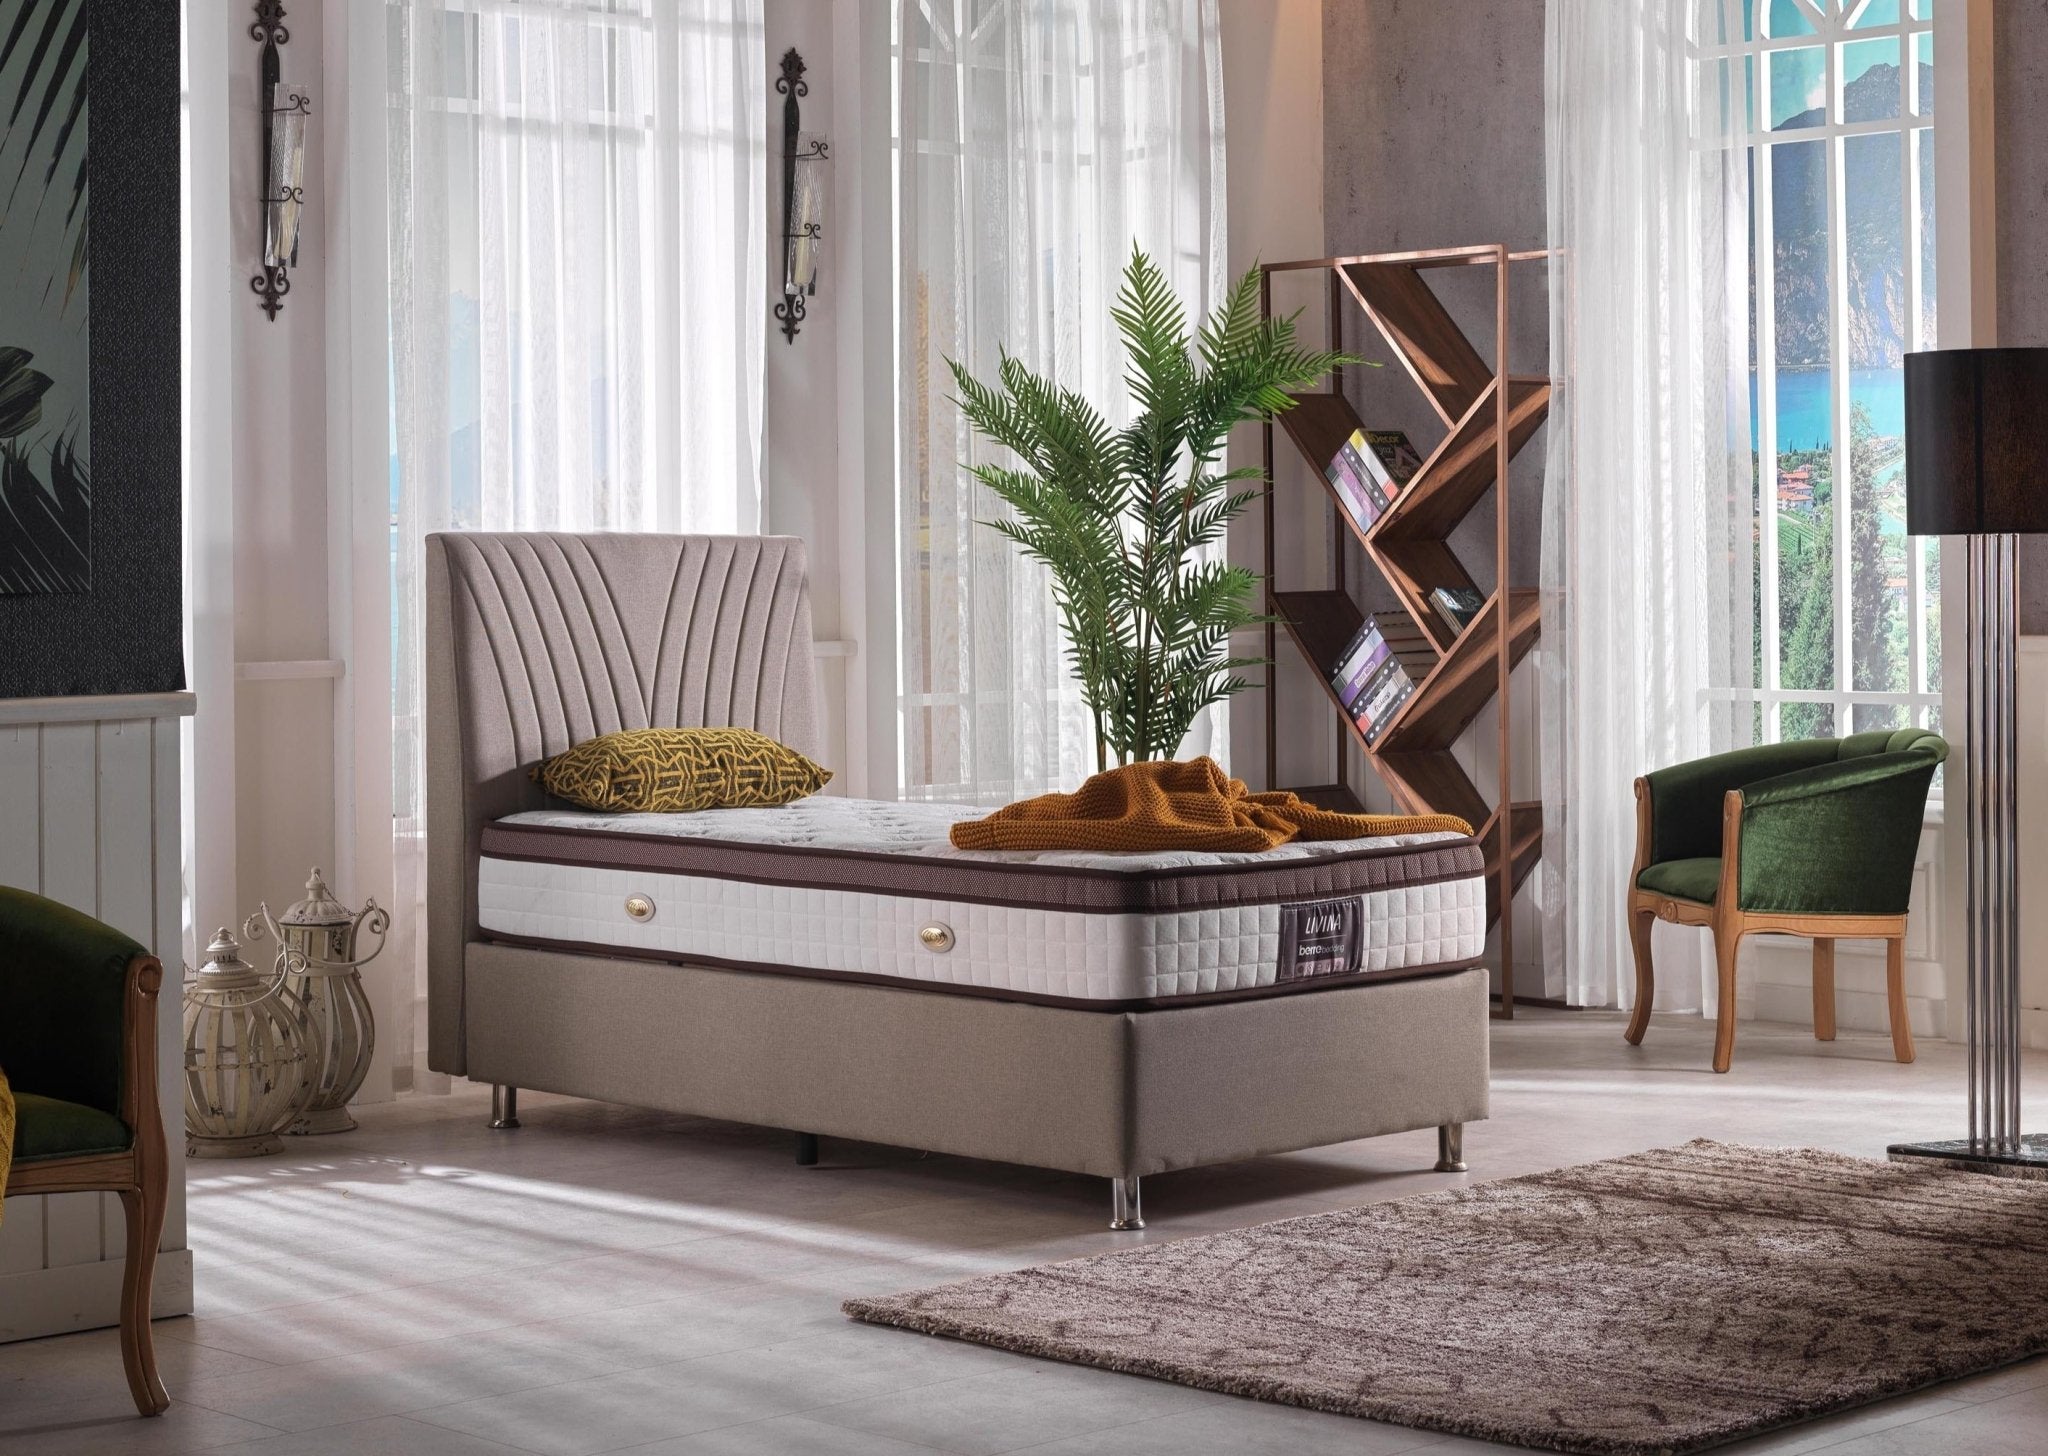 LIVINA Bed - Berre Furniture